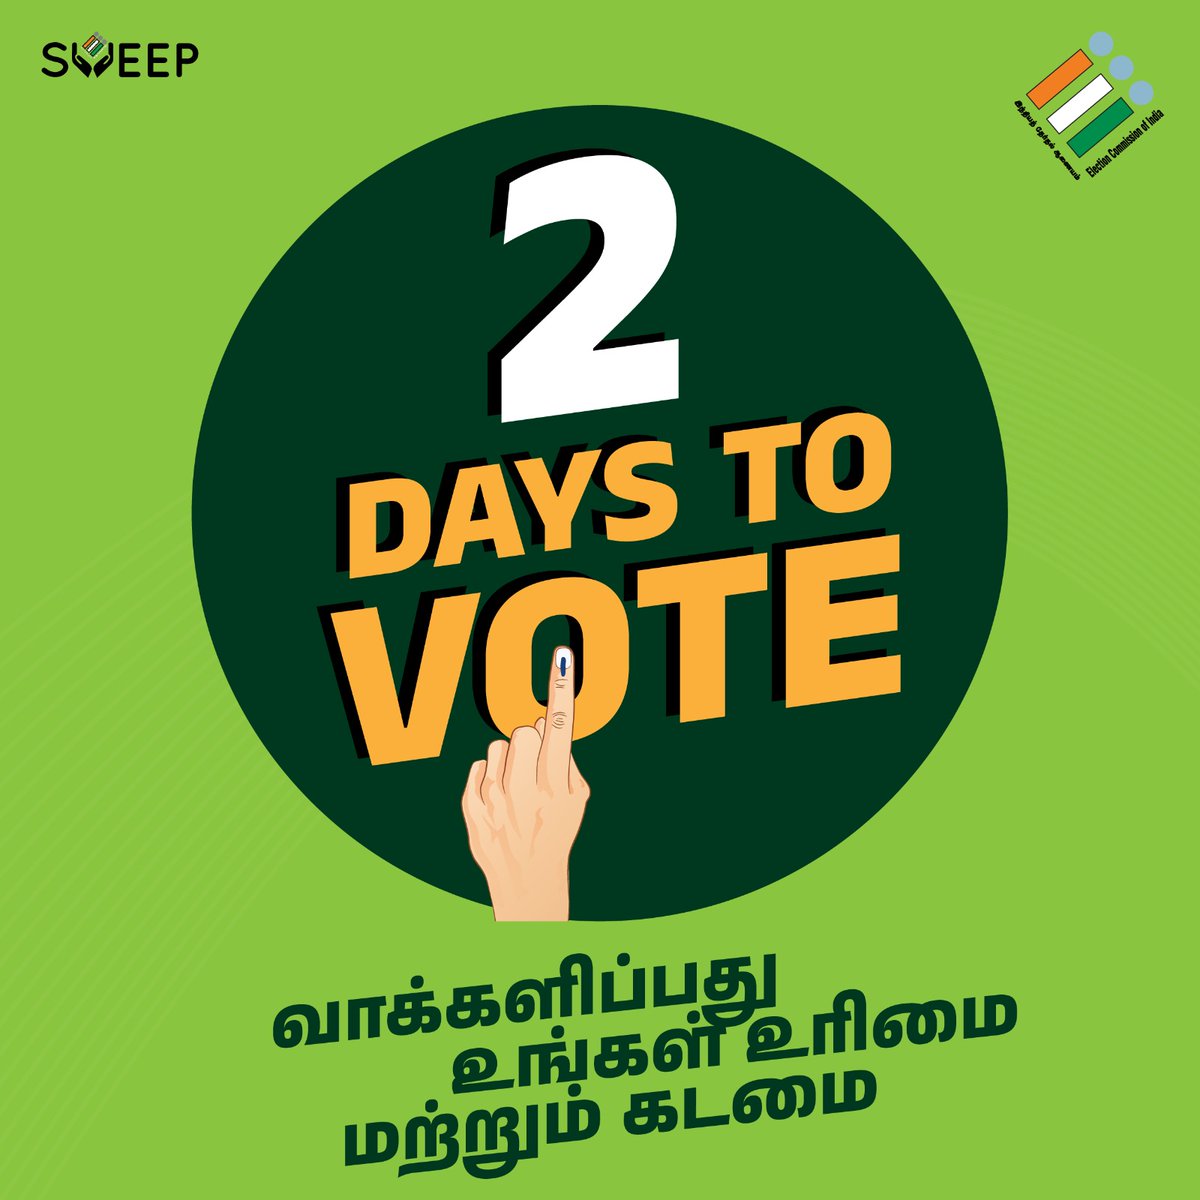 Make sure you vote on April 19th.

#SVEEP #MyFirstVoteForCountry
#ChiefElectoralOfficer_TamilNadu
#LoksabhaElection2024 #TNelection2024
#VoteIndia #Election2024 #BeAVoter #YourVoteMatters #ElectionEngagement #DemocracyMatters #ElectionCommisionOfIndia